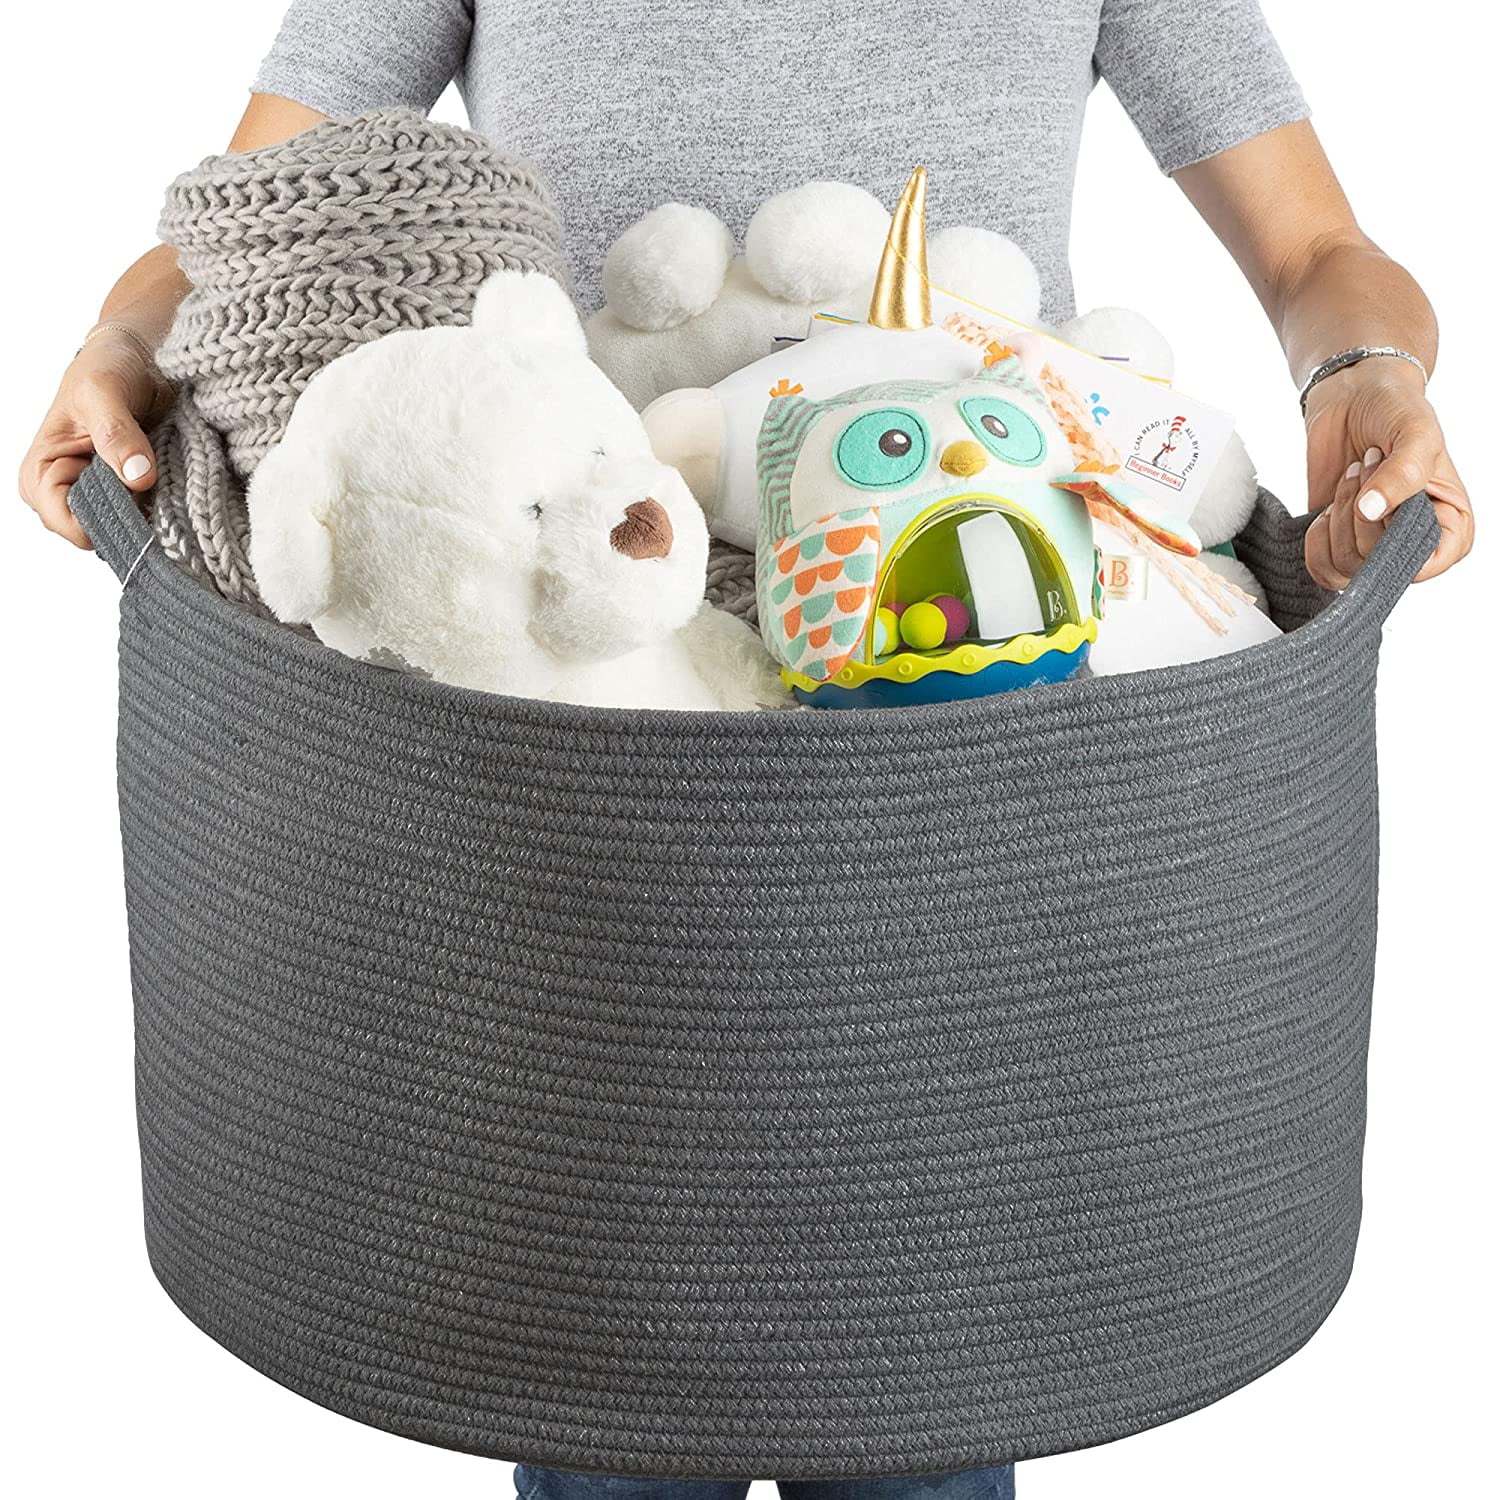 Baby Hamper 22”x14” Baby Blue XXL Cotton Rope Basket Extra Large Woven Storage Basket Round Basket Toy Storage Basket Nursery Decor Laundry Basket 100% Natural Cotton 